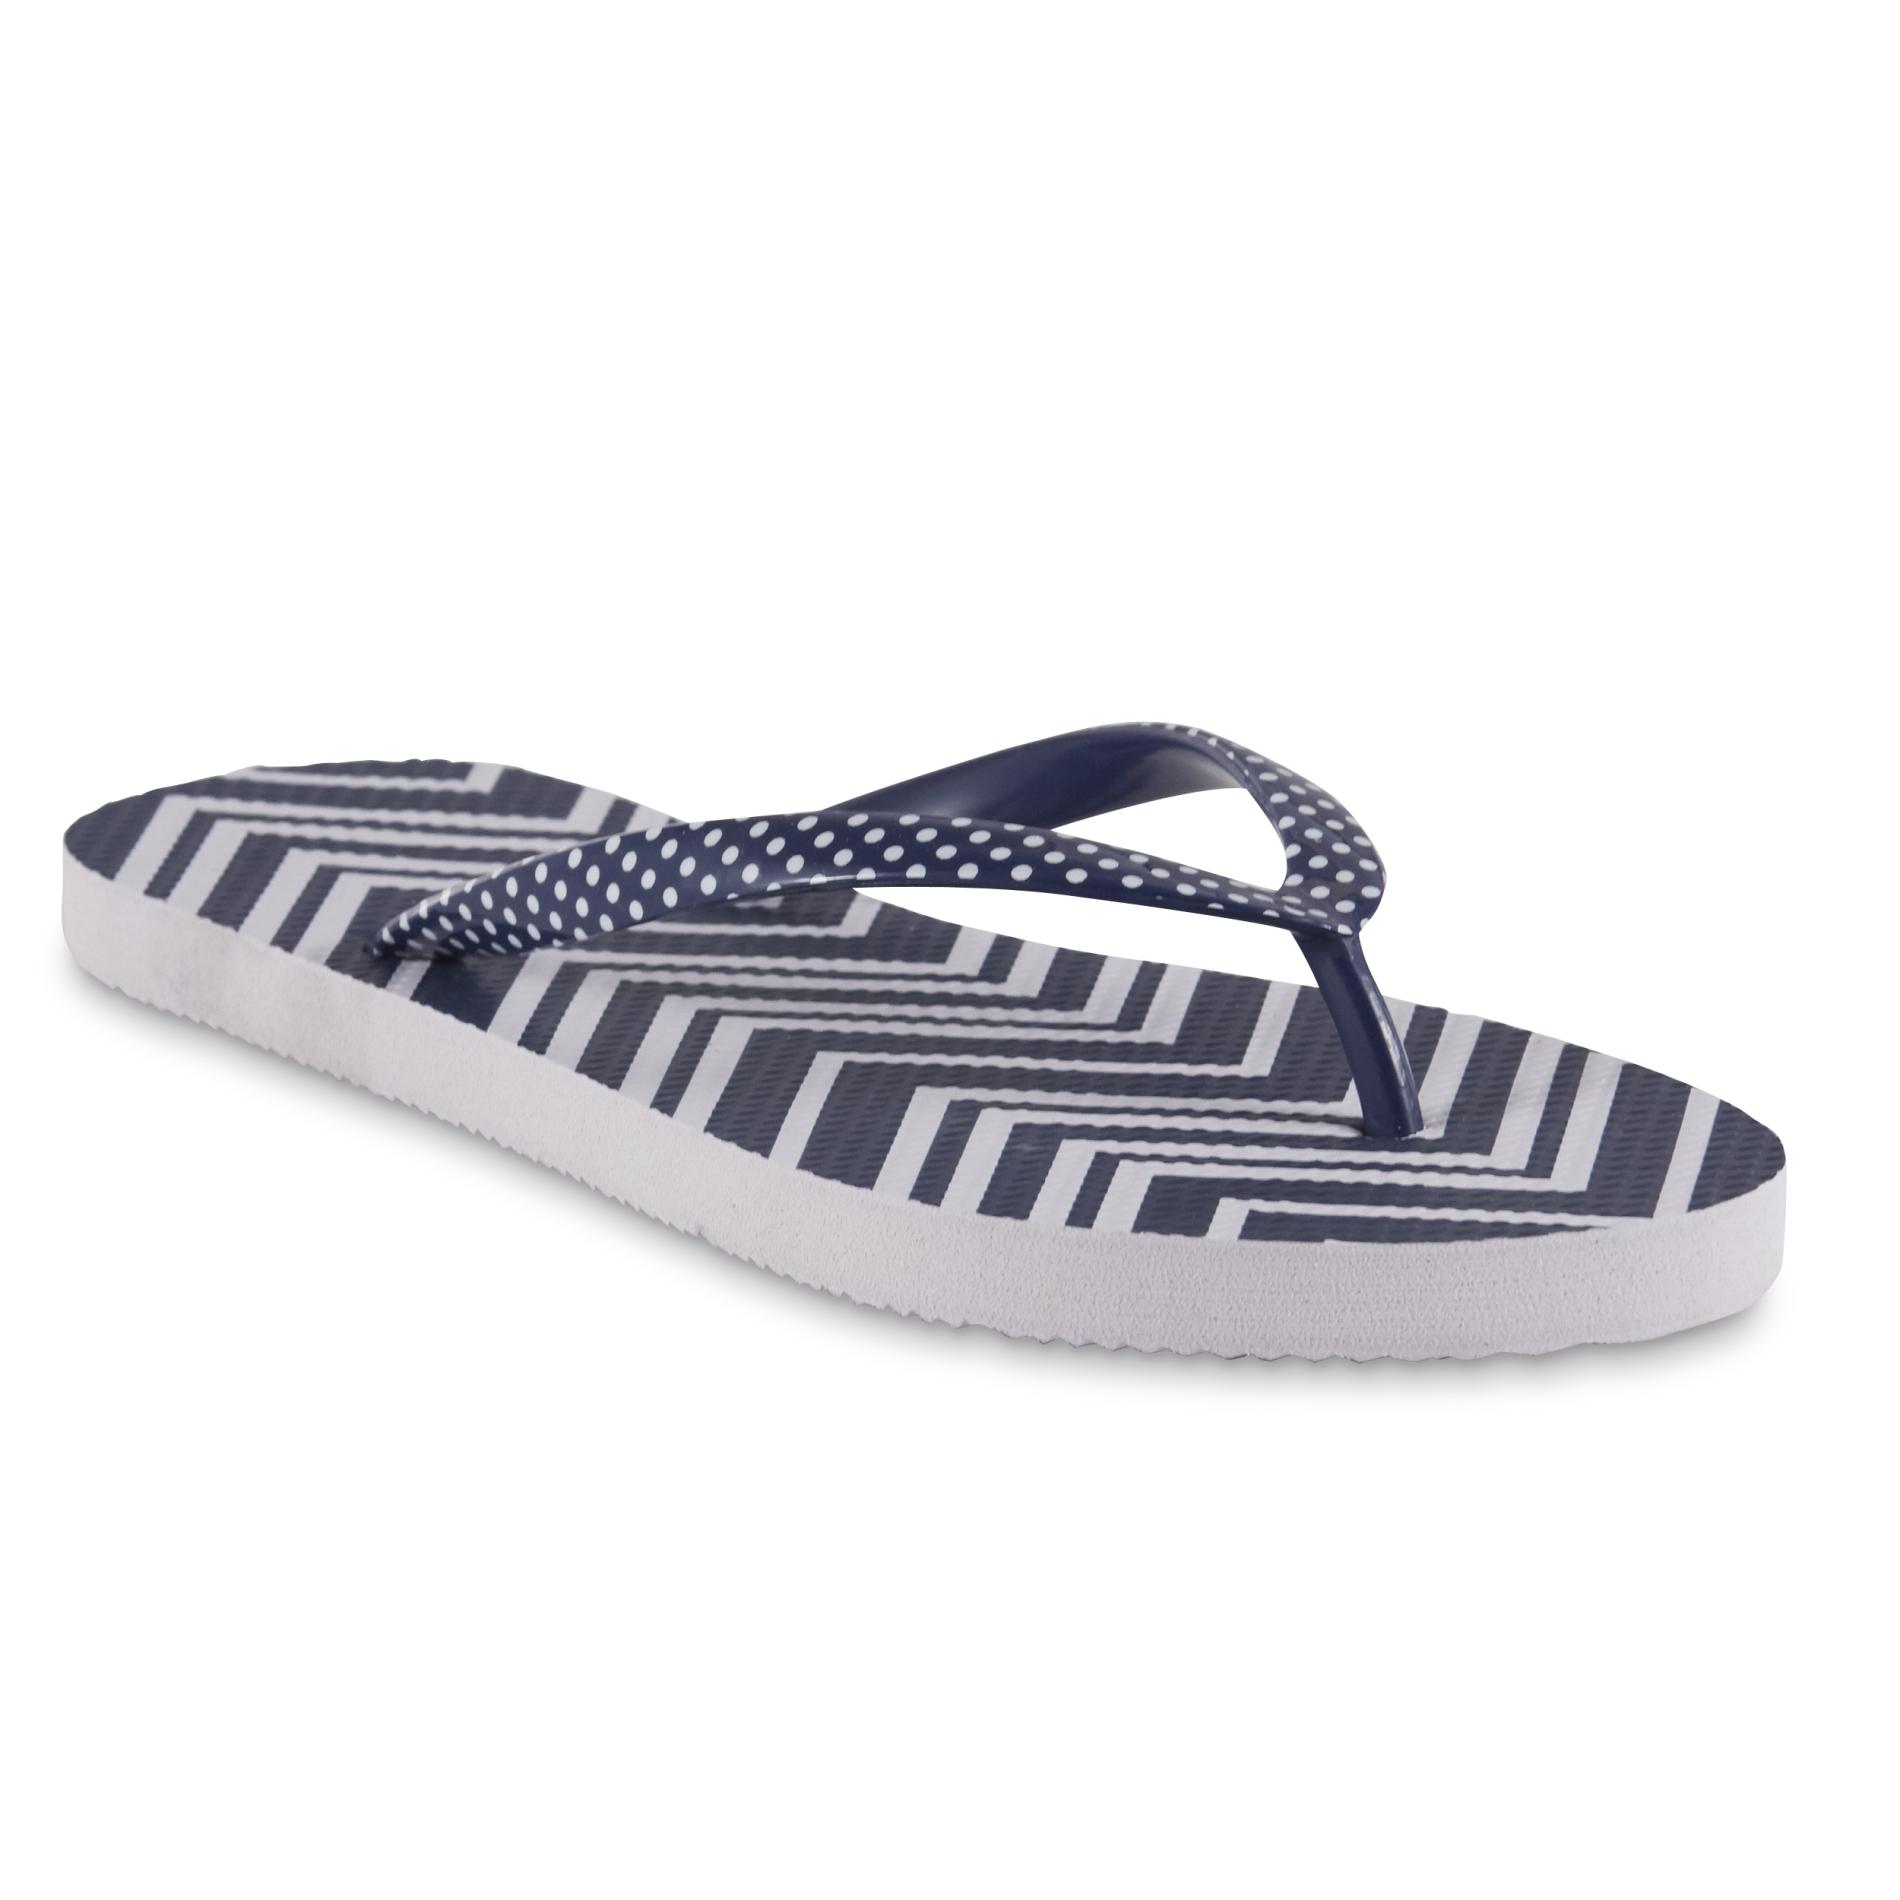 Simply Styled Women's Zori Flip-Flop Sandal - Navy/White